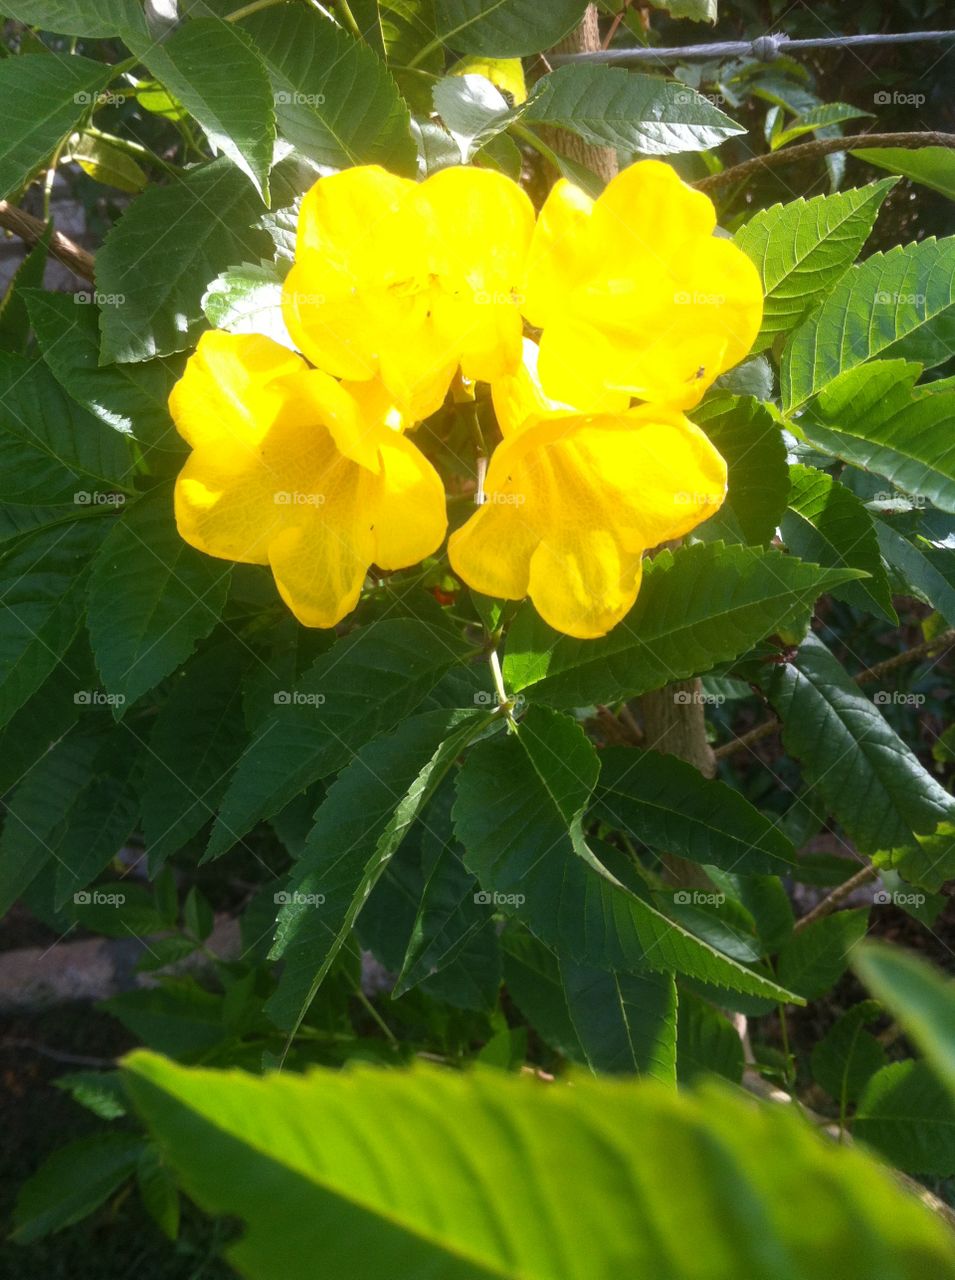 Sun reflection on Yellow Flowers